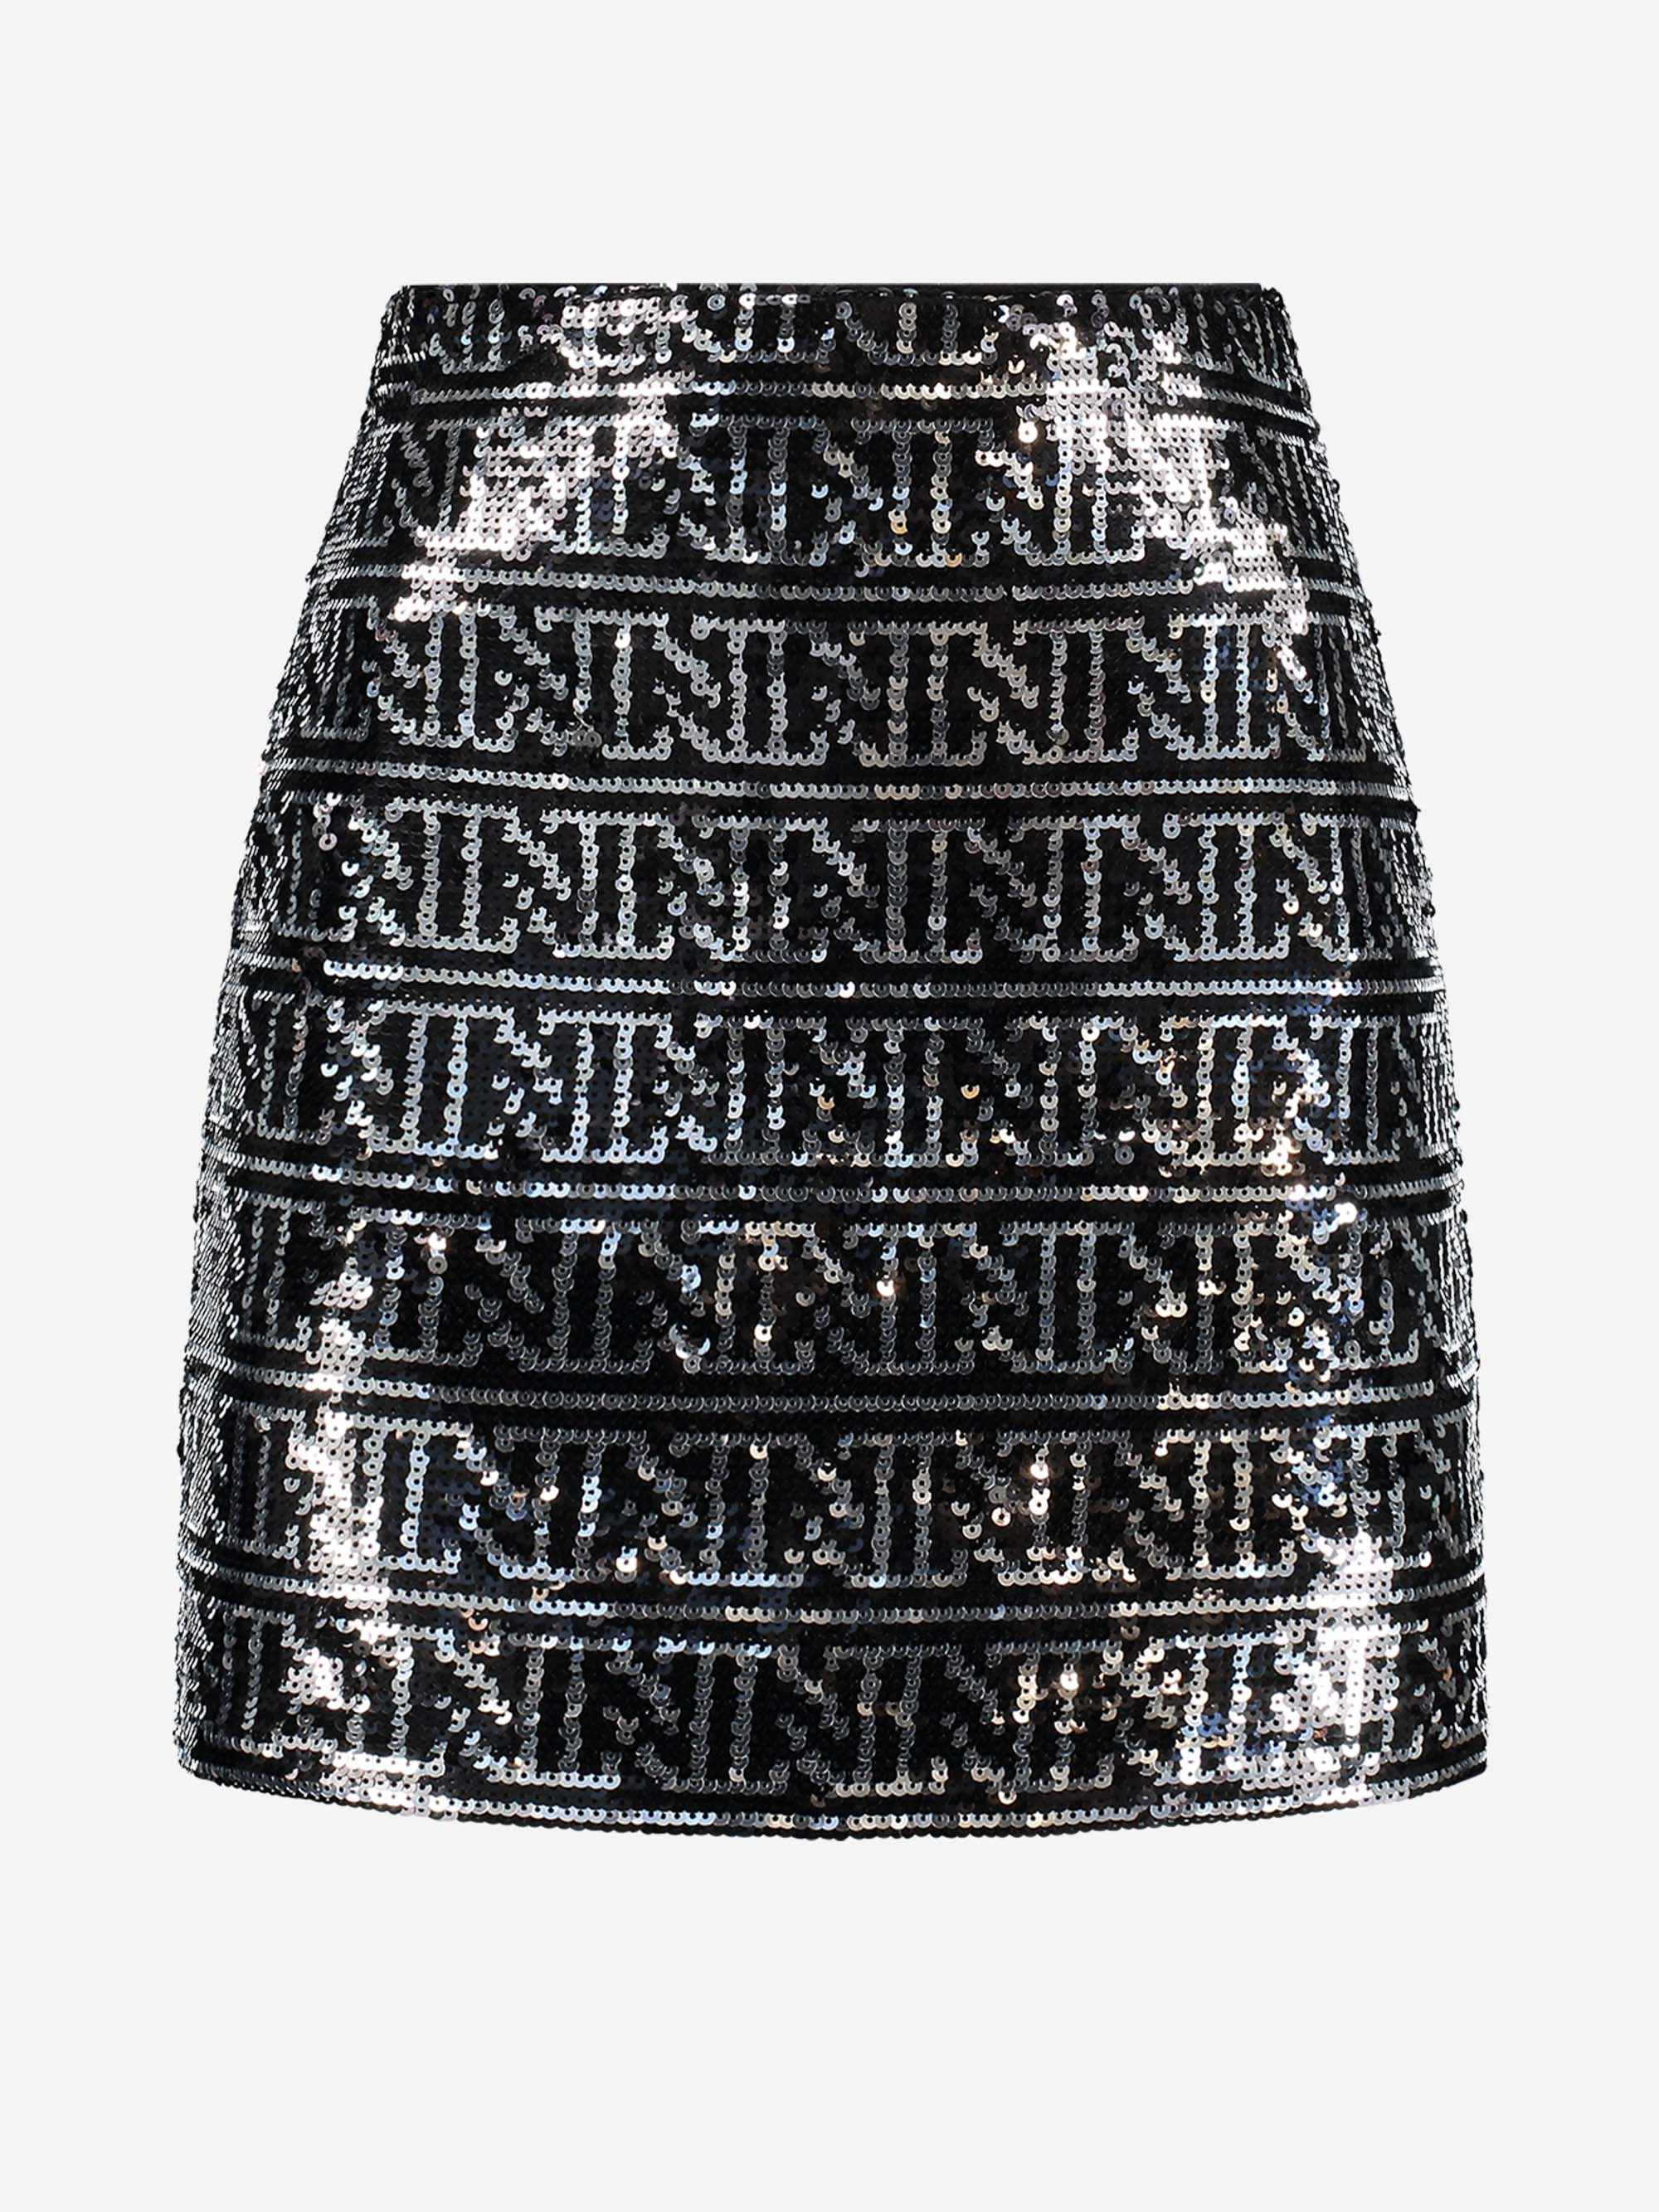 sequin skirt with N monogram 